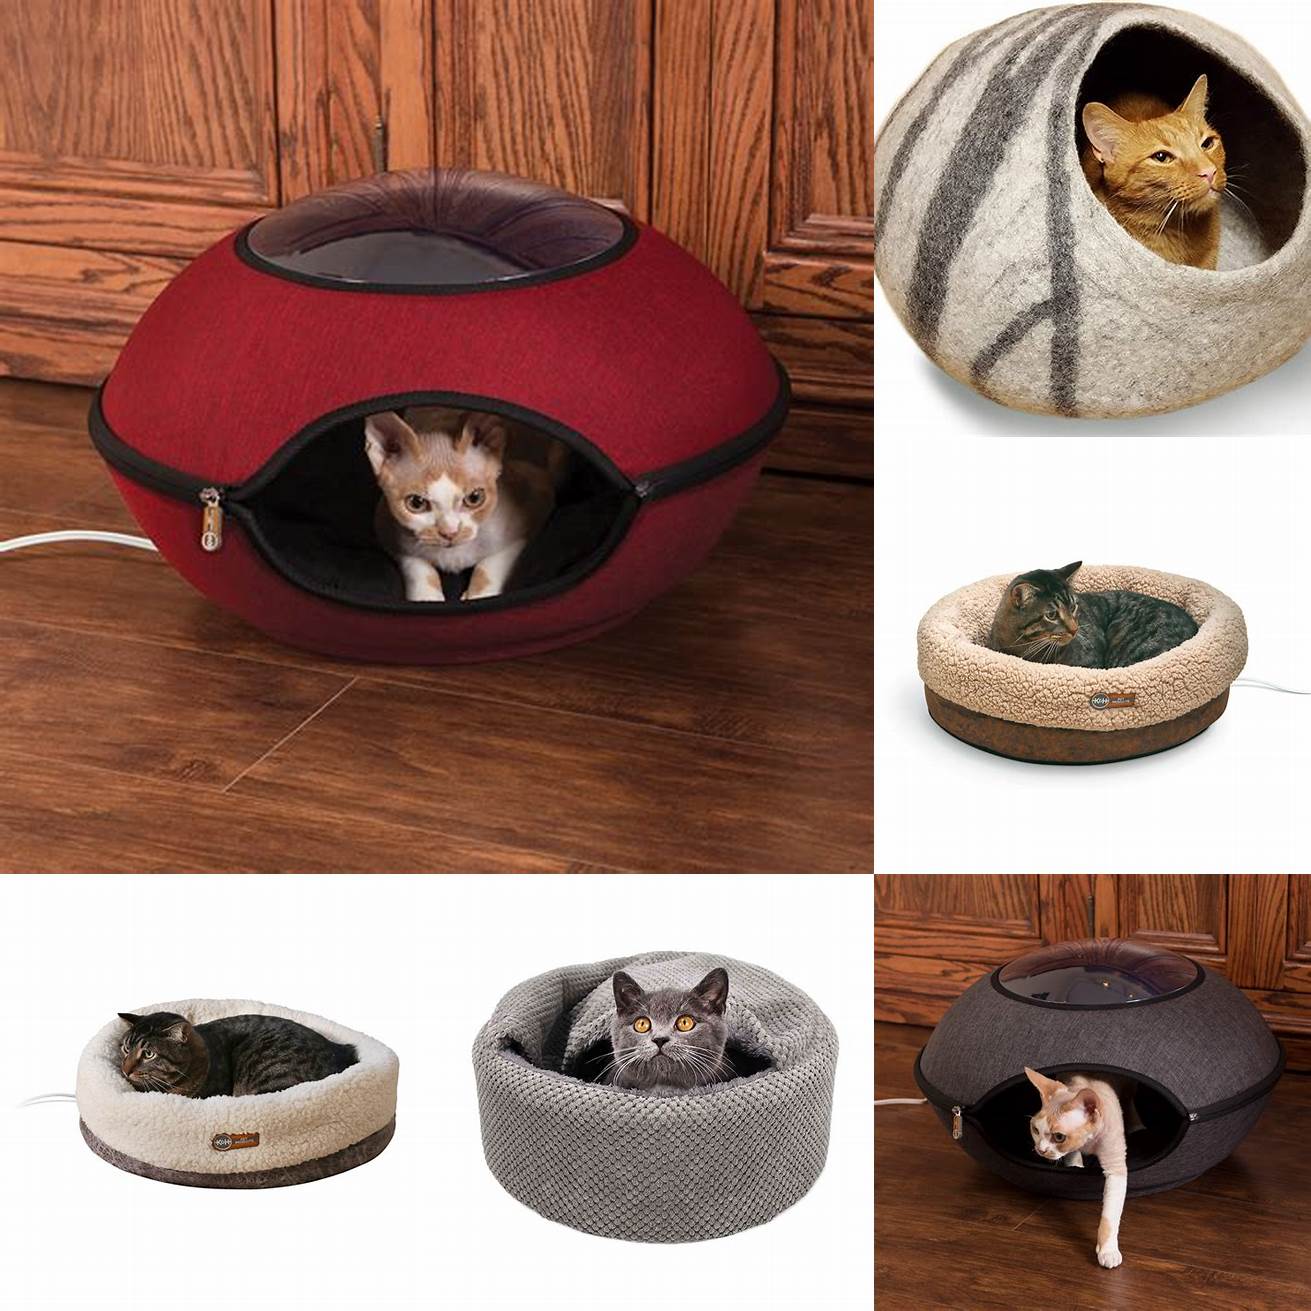 Heated cat beds